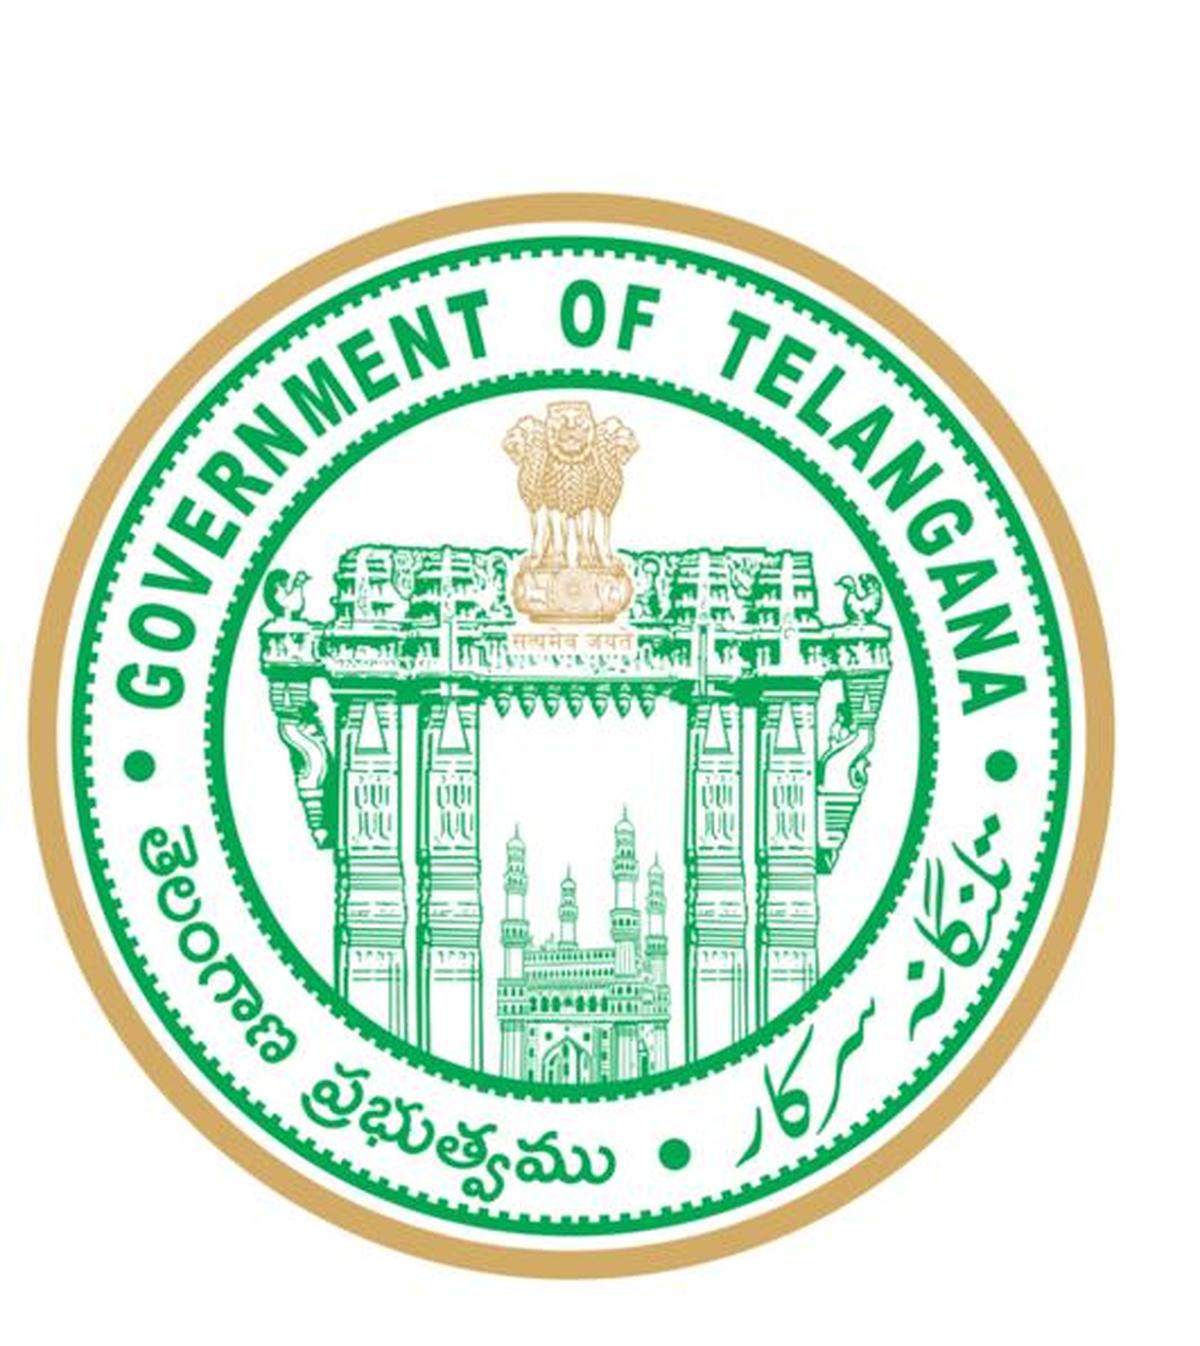 The current emblem of Telangana State